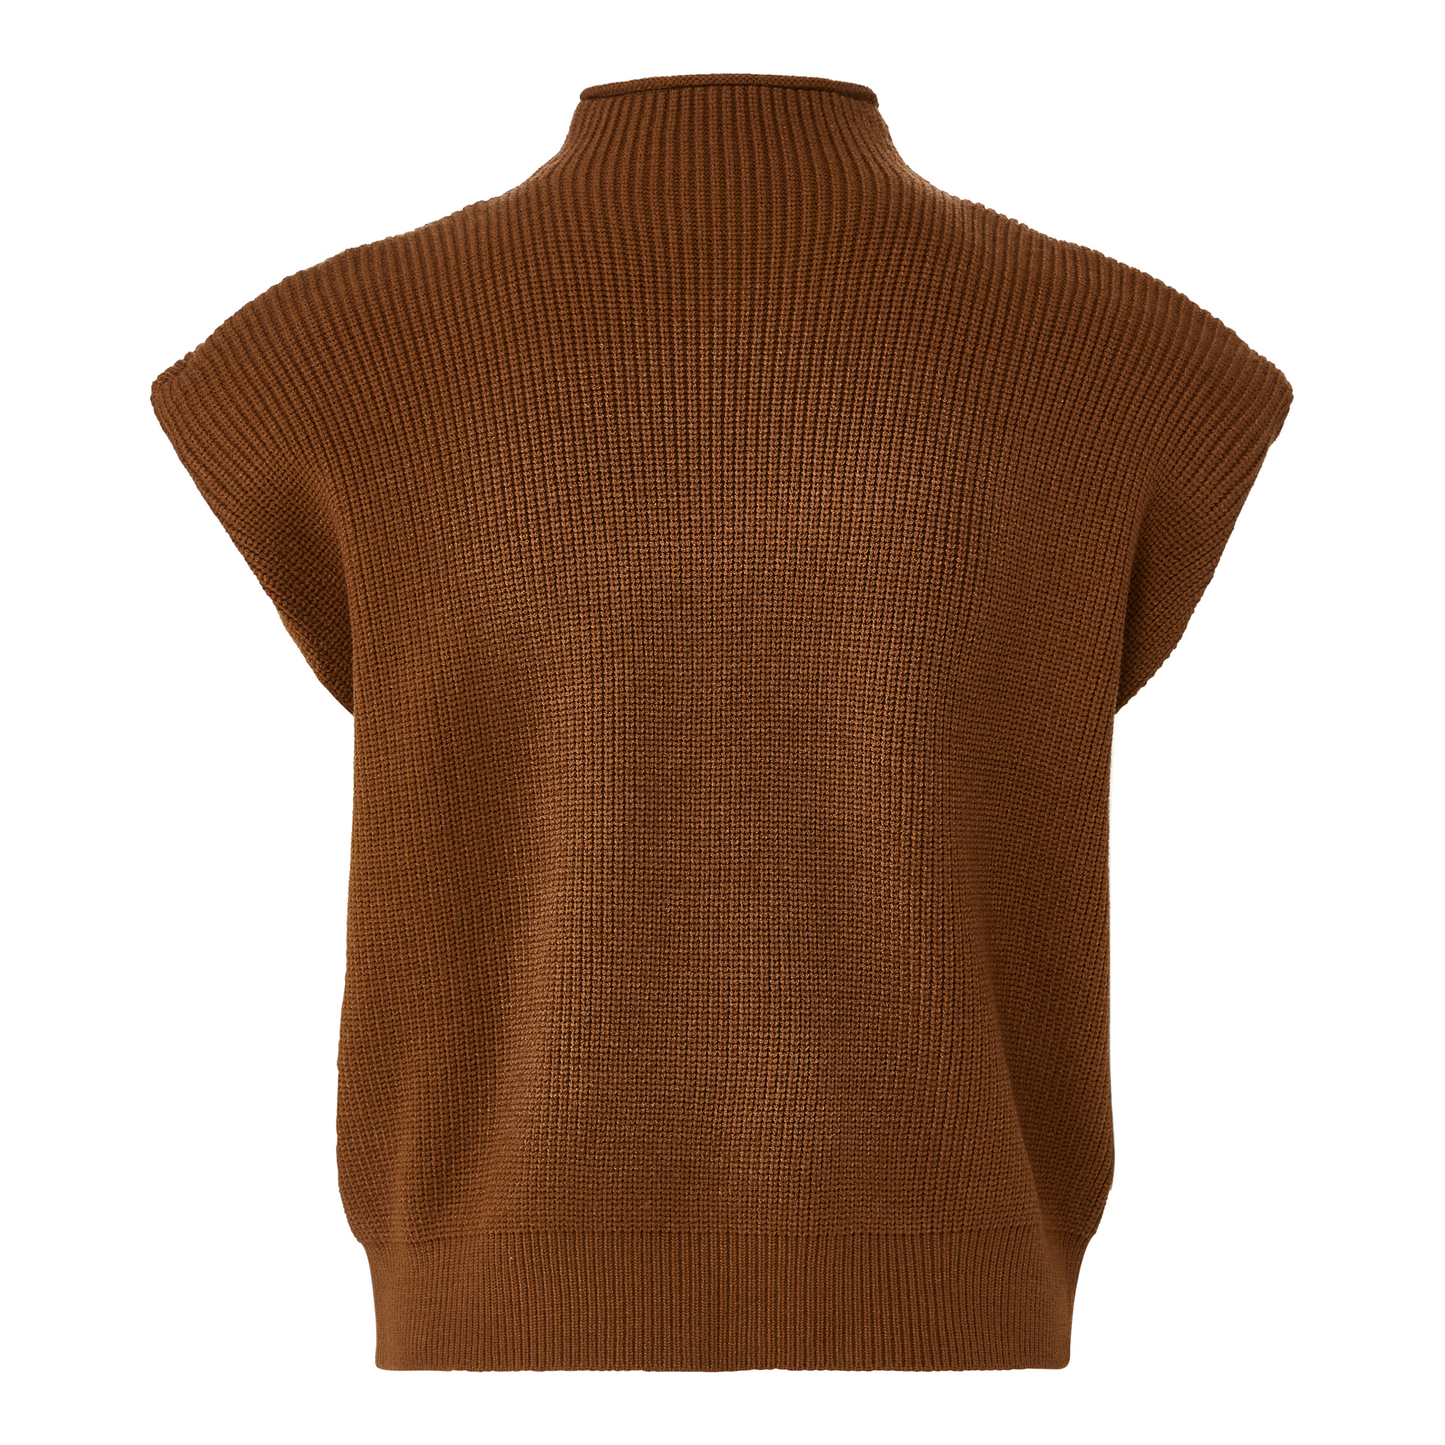 Sleeveless Sweater Top - Coffee